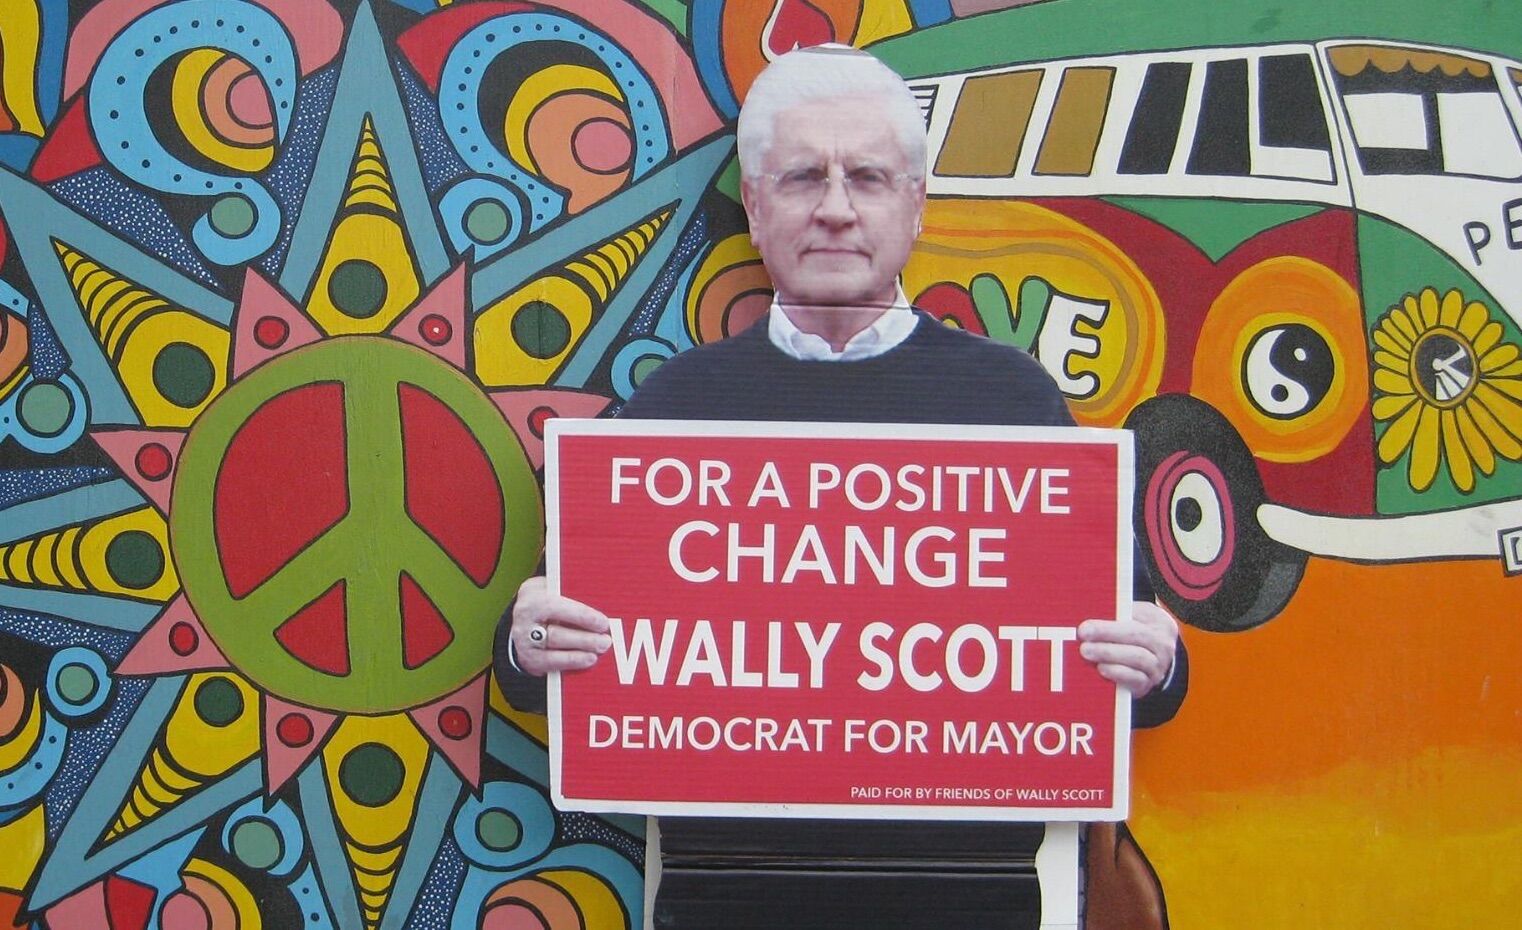 A cardboard cutout of Reading, PA mayor Wally Scott promises "positive change"